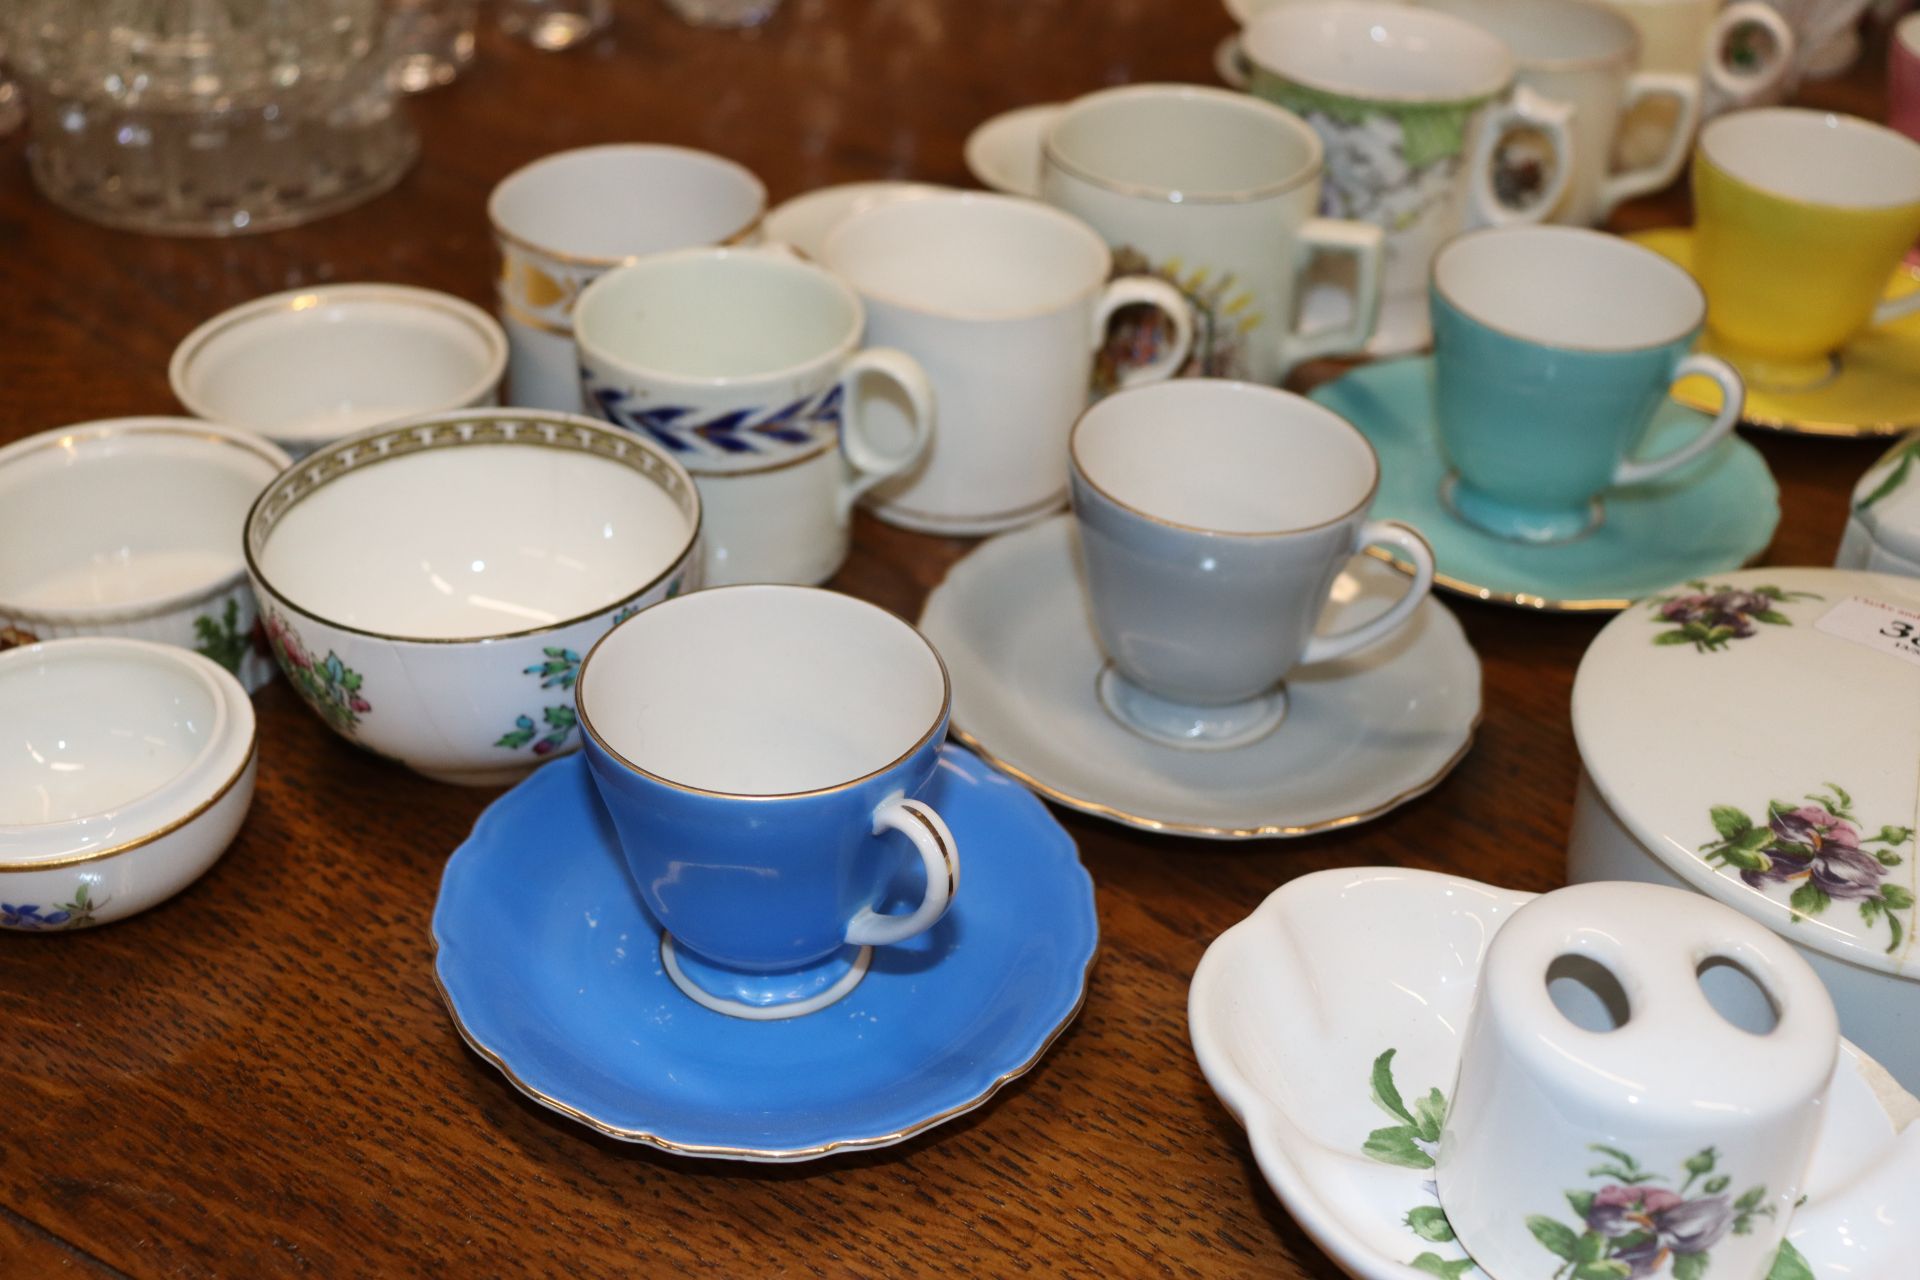 A quantity of various decorative china and tea war - Image 4 of 9